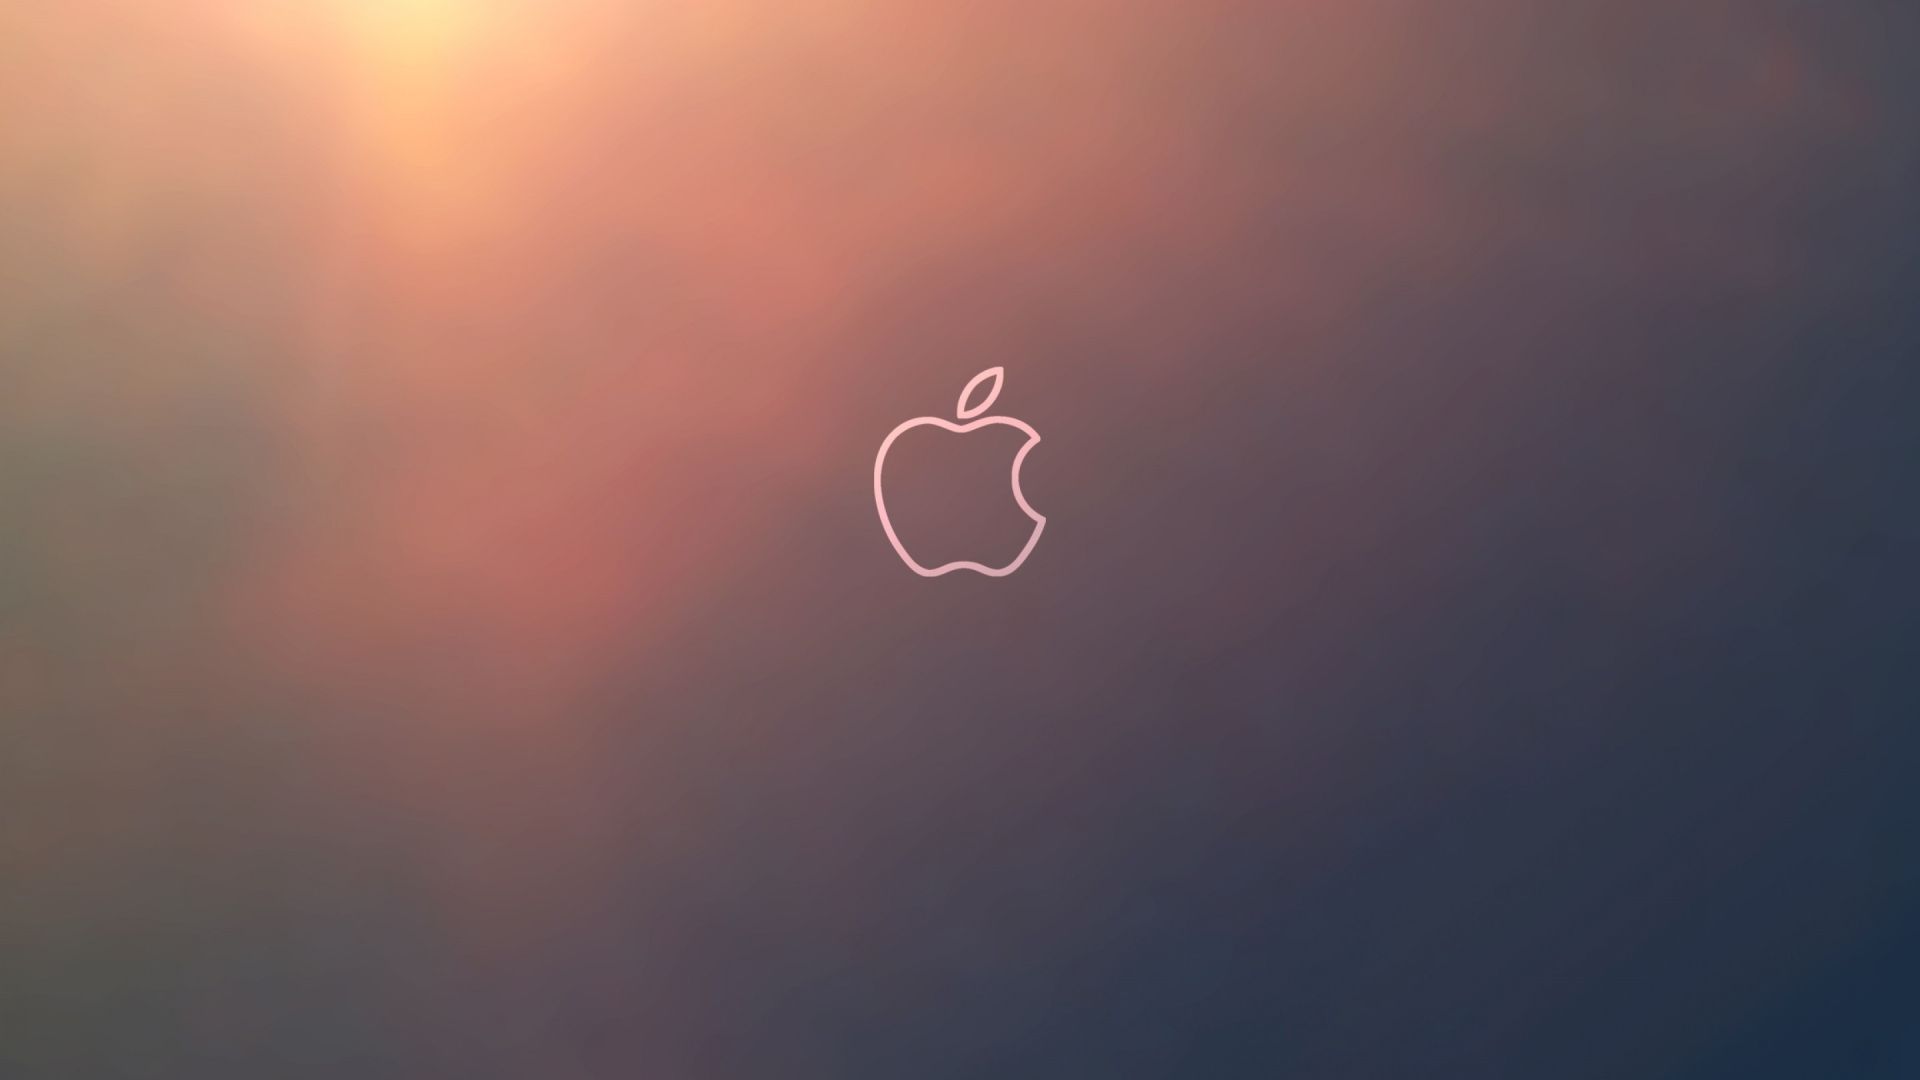 Apple Fluorescence Brand Mac Wallpaper Download | Free Mac ...